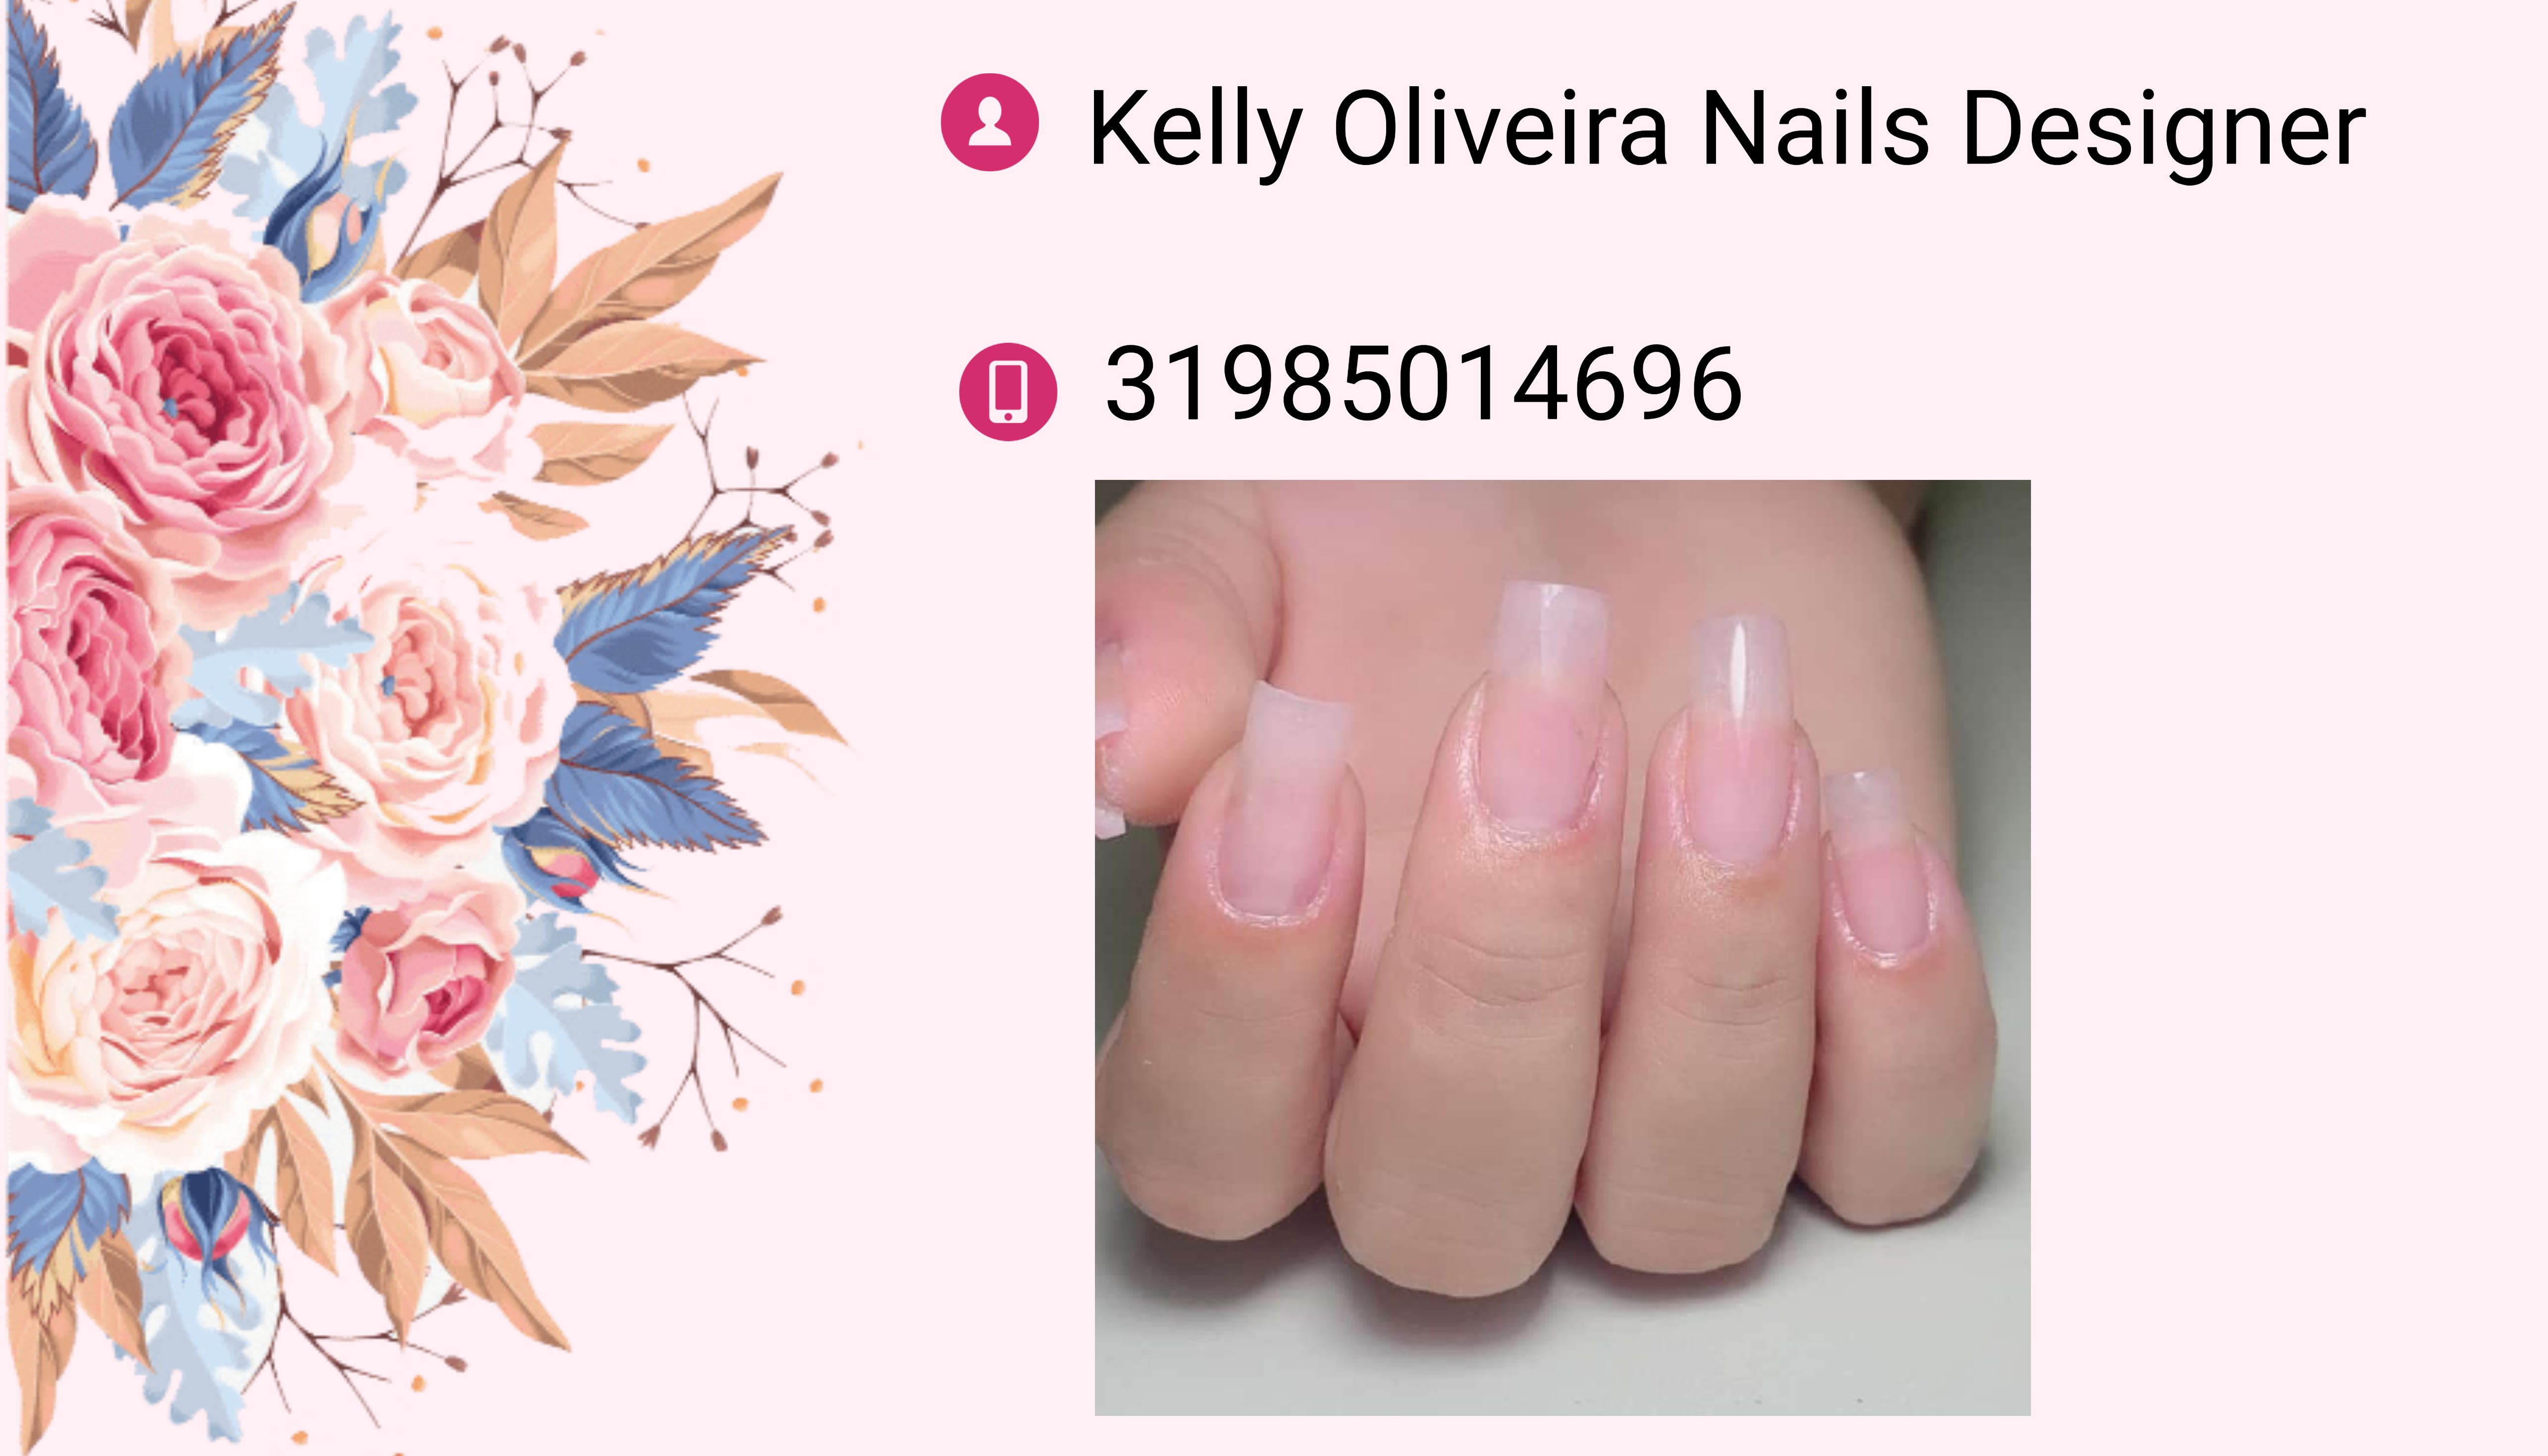 Kelly Oliveira Nails Designer